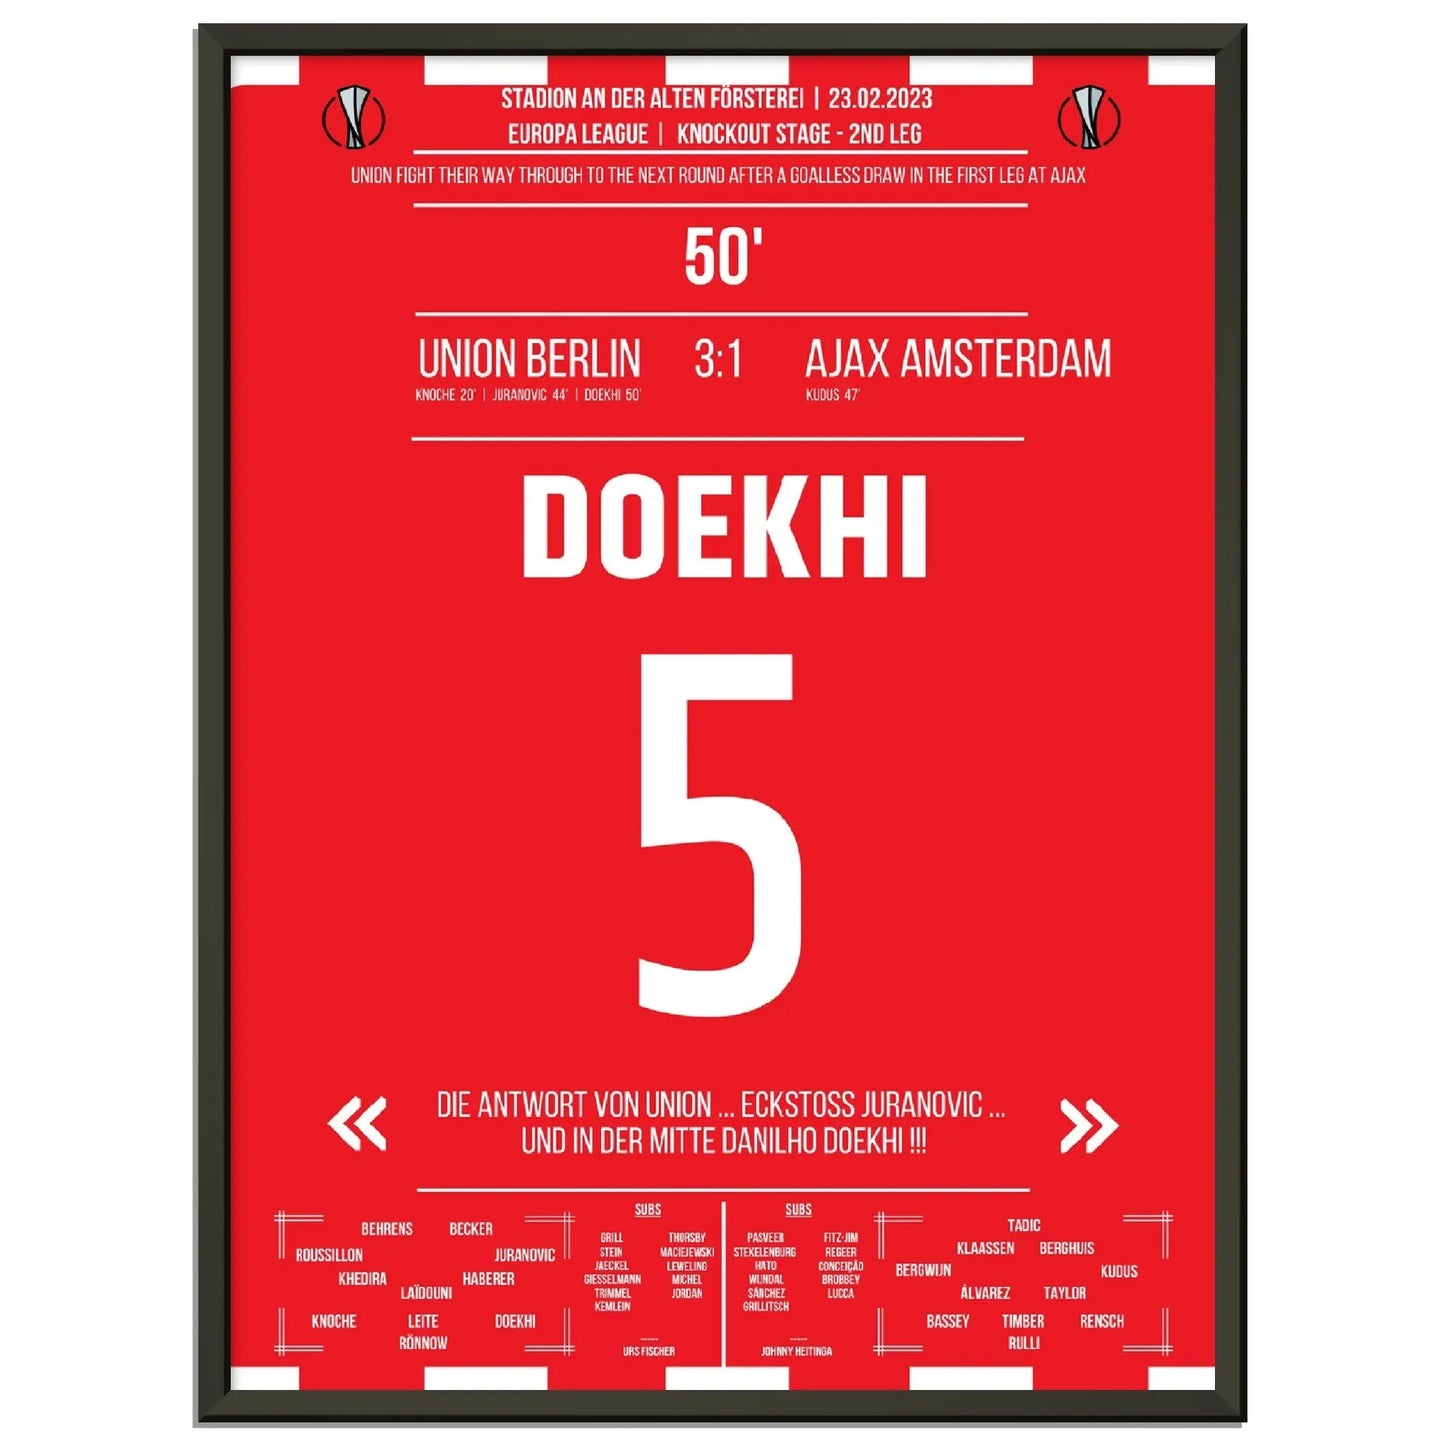 Doekhi trifft zum Einzug ins Europa League Achtelfinale 